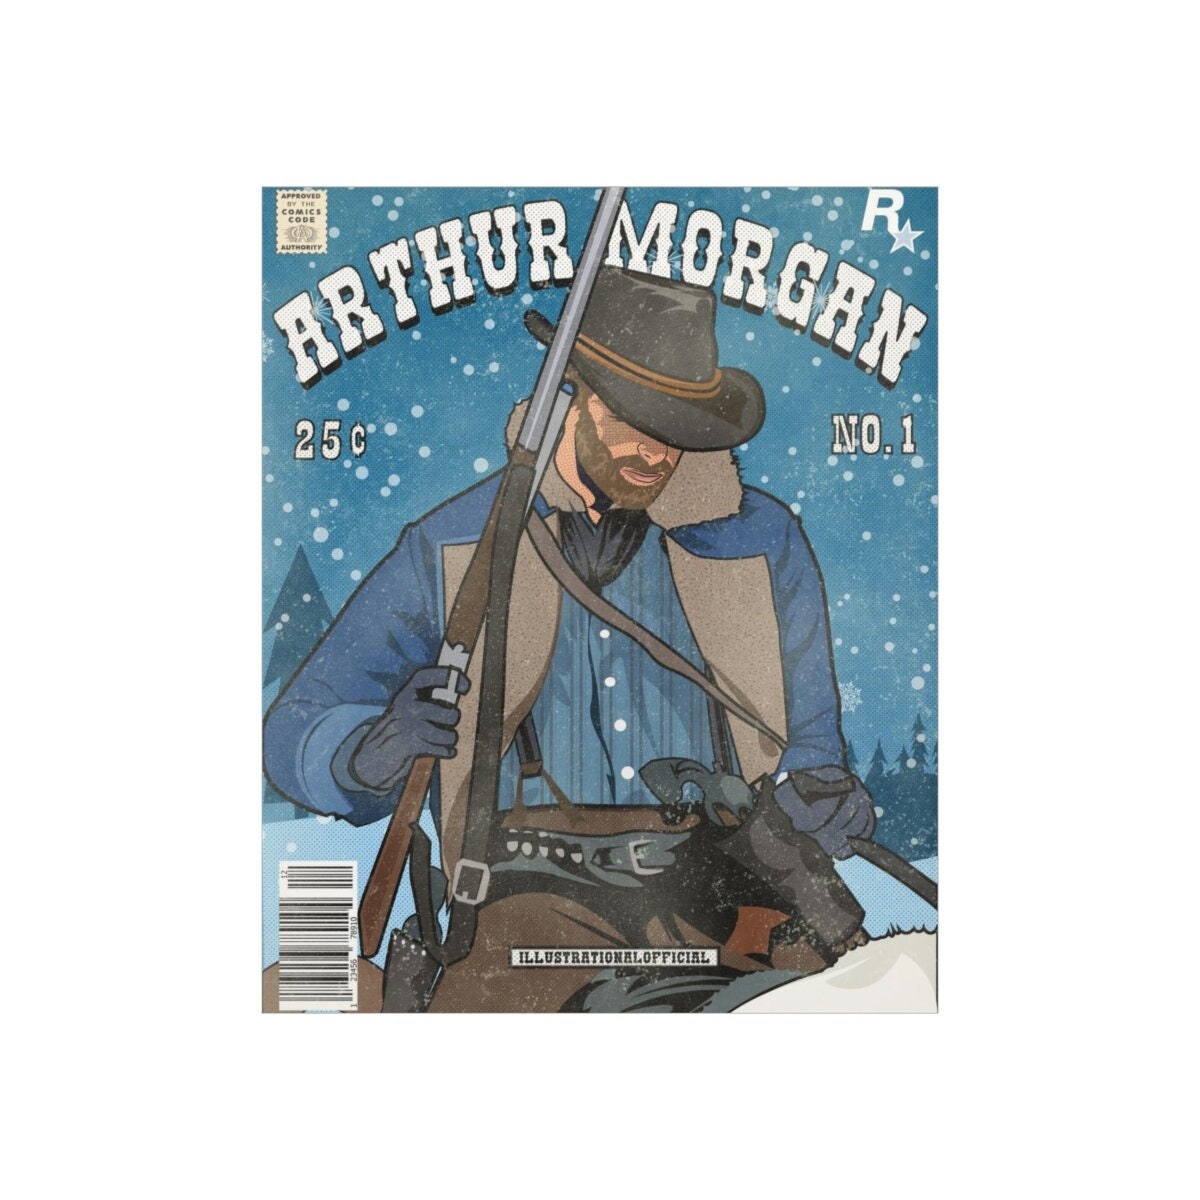 Arthur Morgan RDR2 Mounted Print for Sale by rdrmaniac